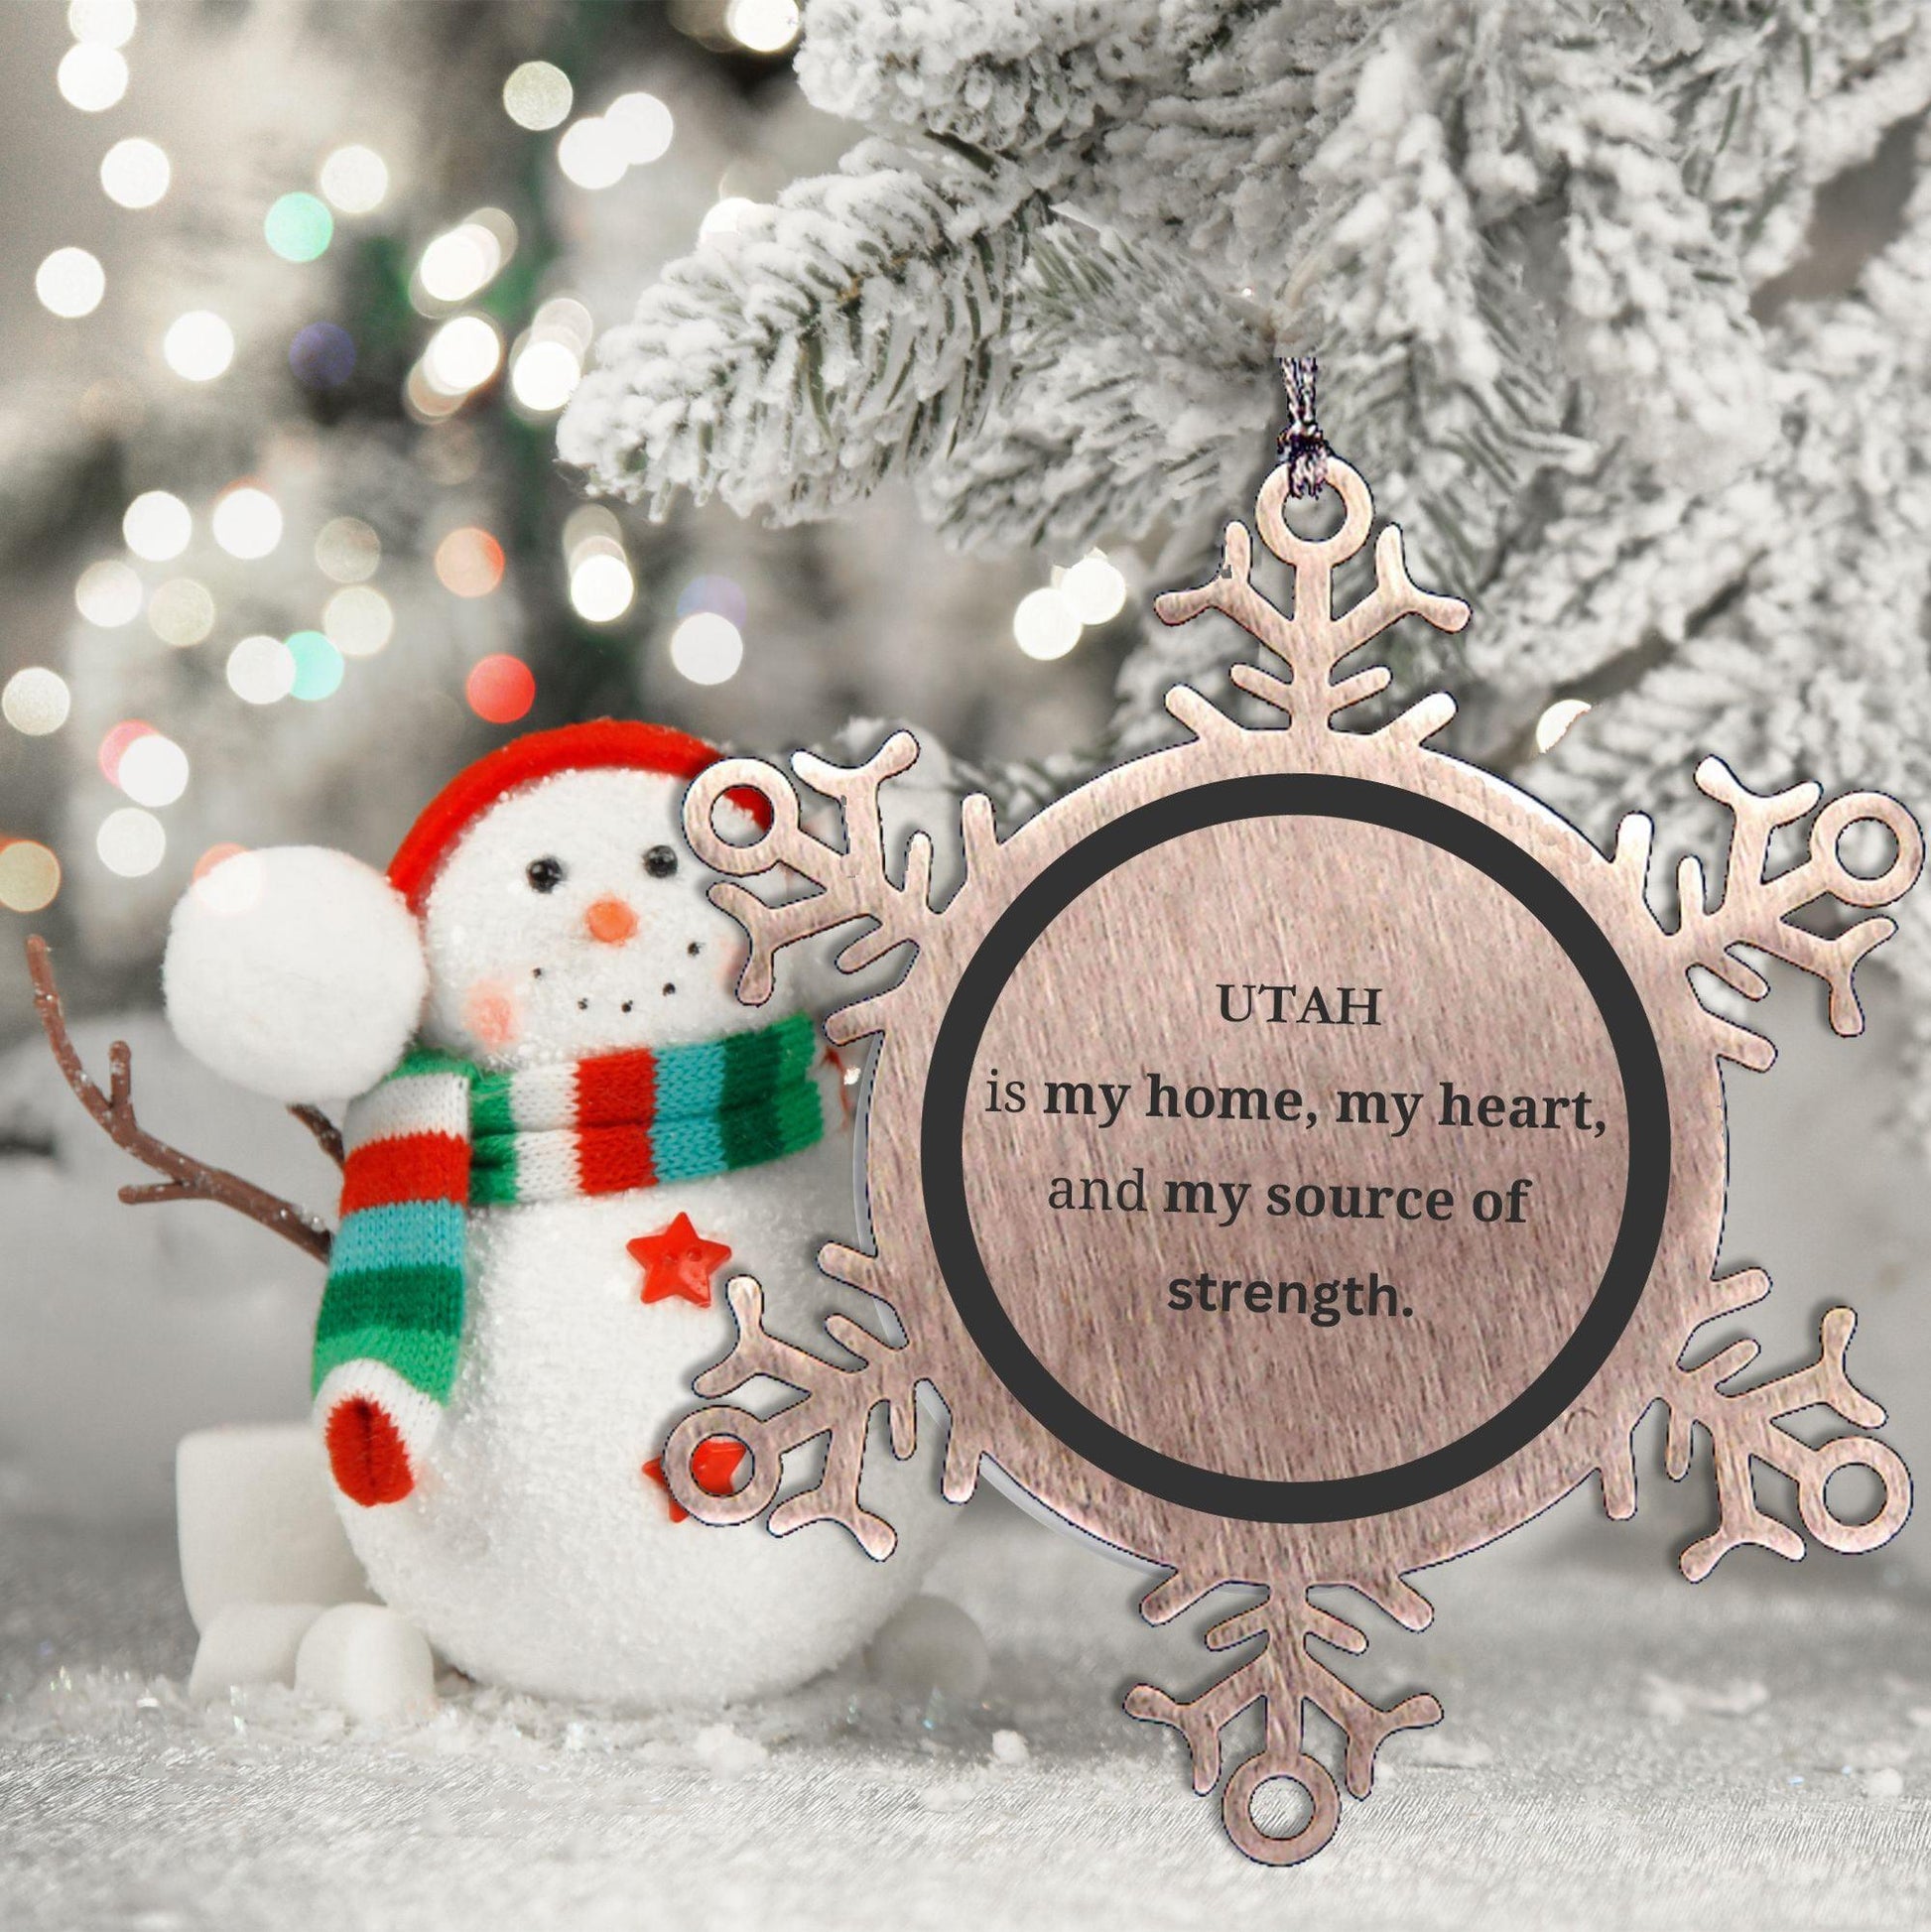 Utah is my home Gifts, Lovely Utah Birthday Christmas Snowflake Ornament For People from Utah, Men, Women, Friends - Mallard Moon Gift Shop